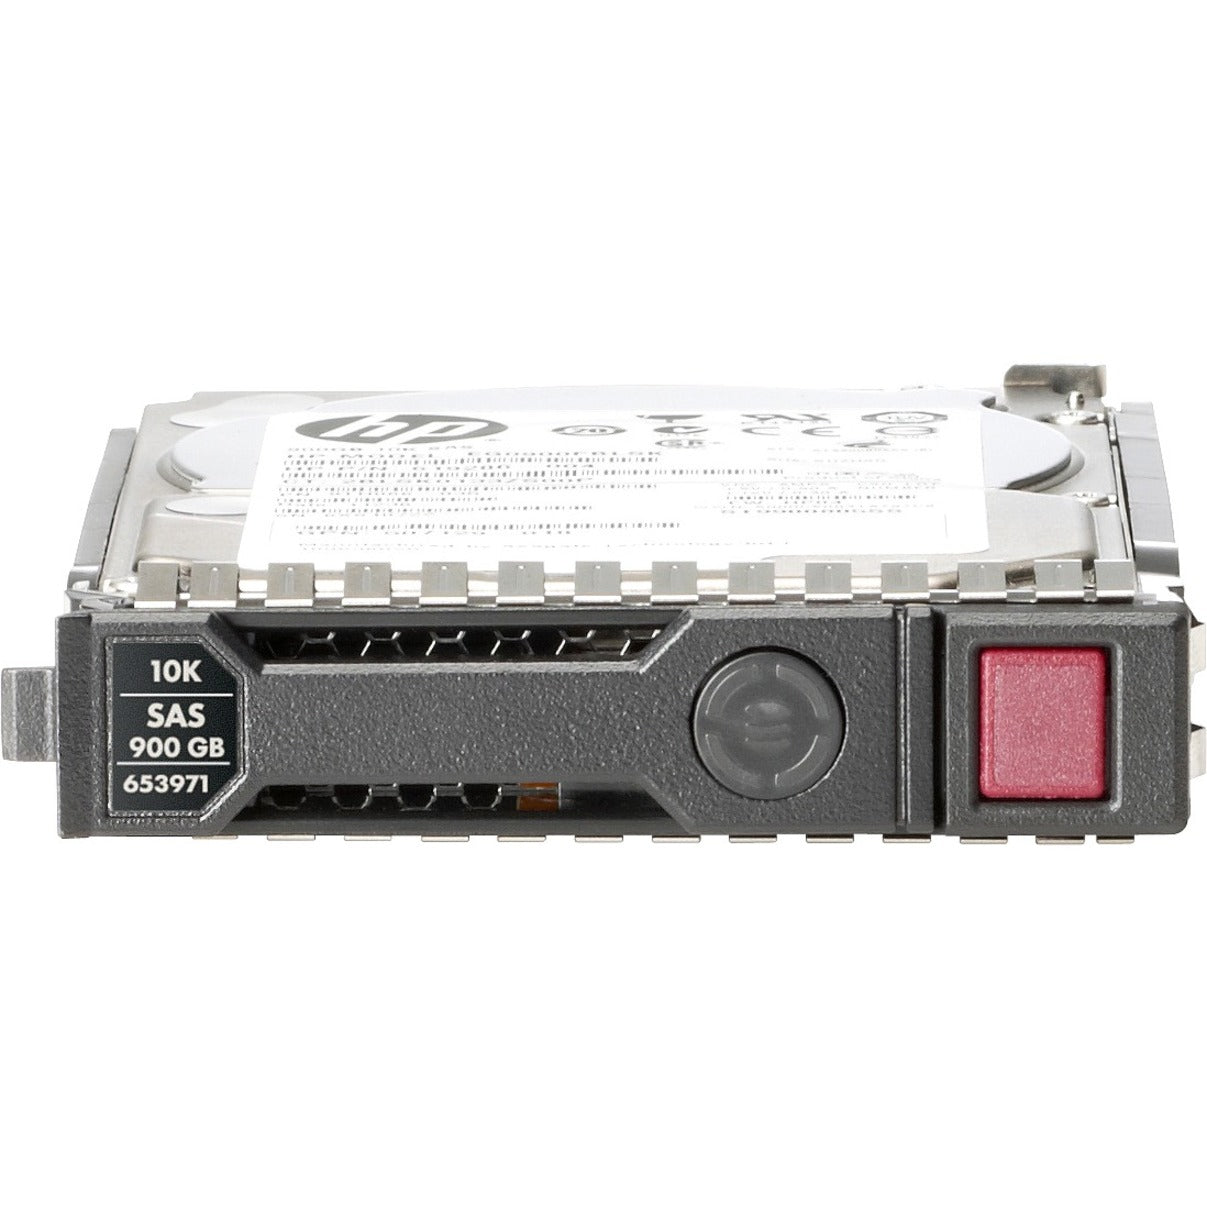 HPE Sourcing 652564-B21 300GB 6G SAS 10K rpm SFF (2.5-inch) SC Enterprise Hard Drive, High Performance Storage Solution